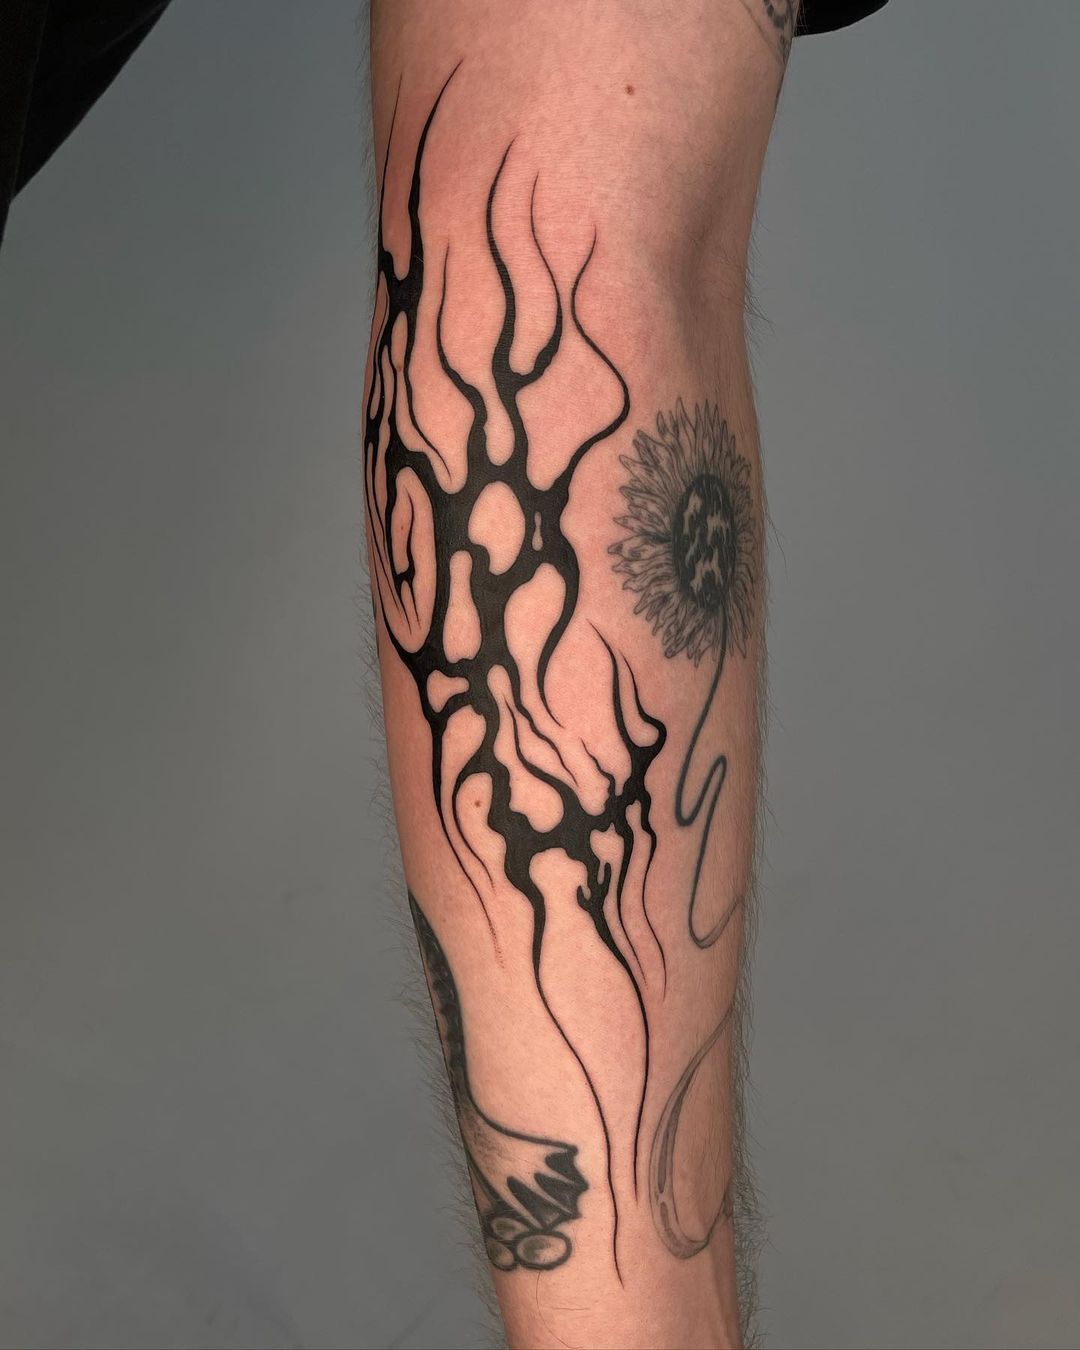 Blackwork tattoo on forearm by carolineraer